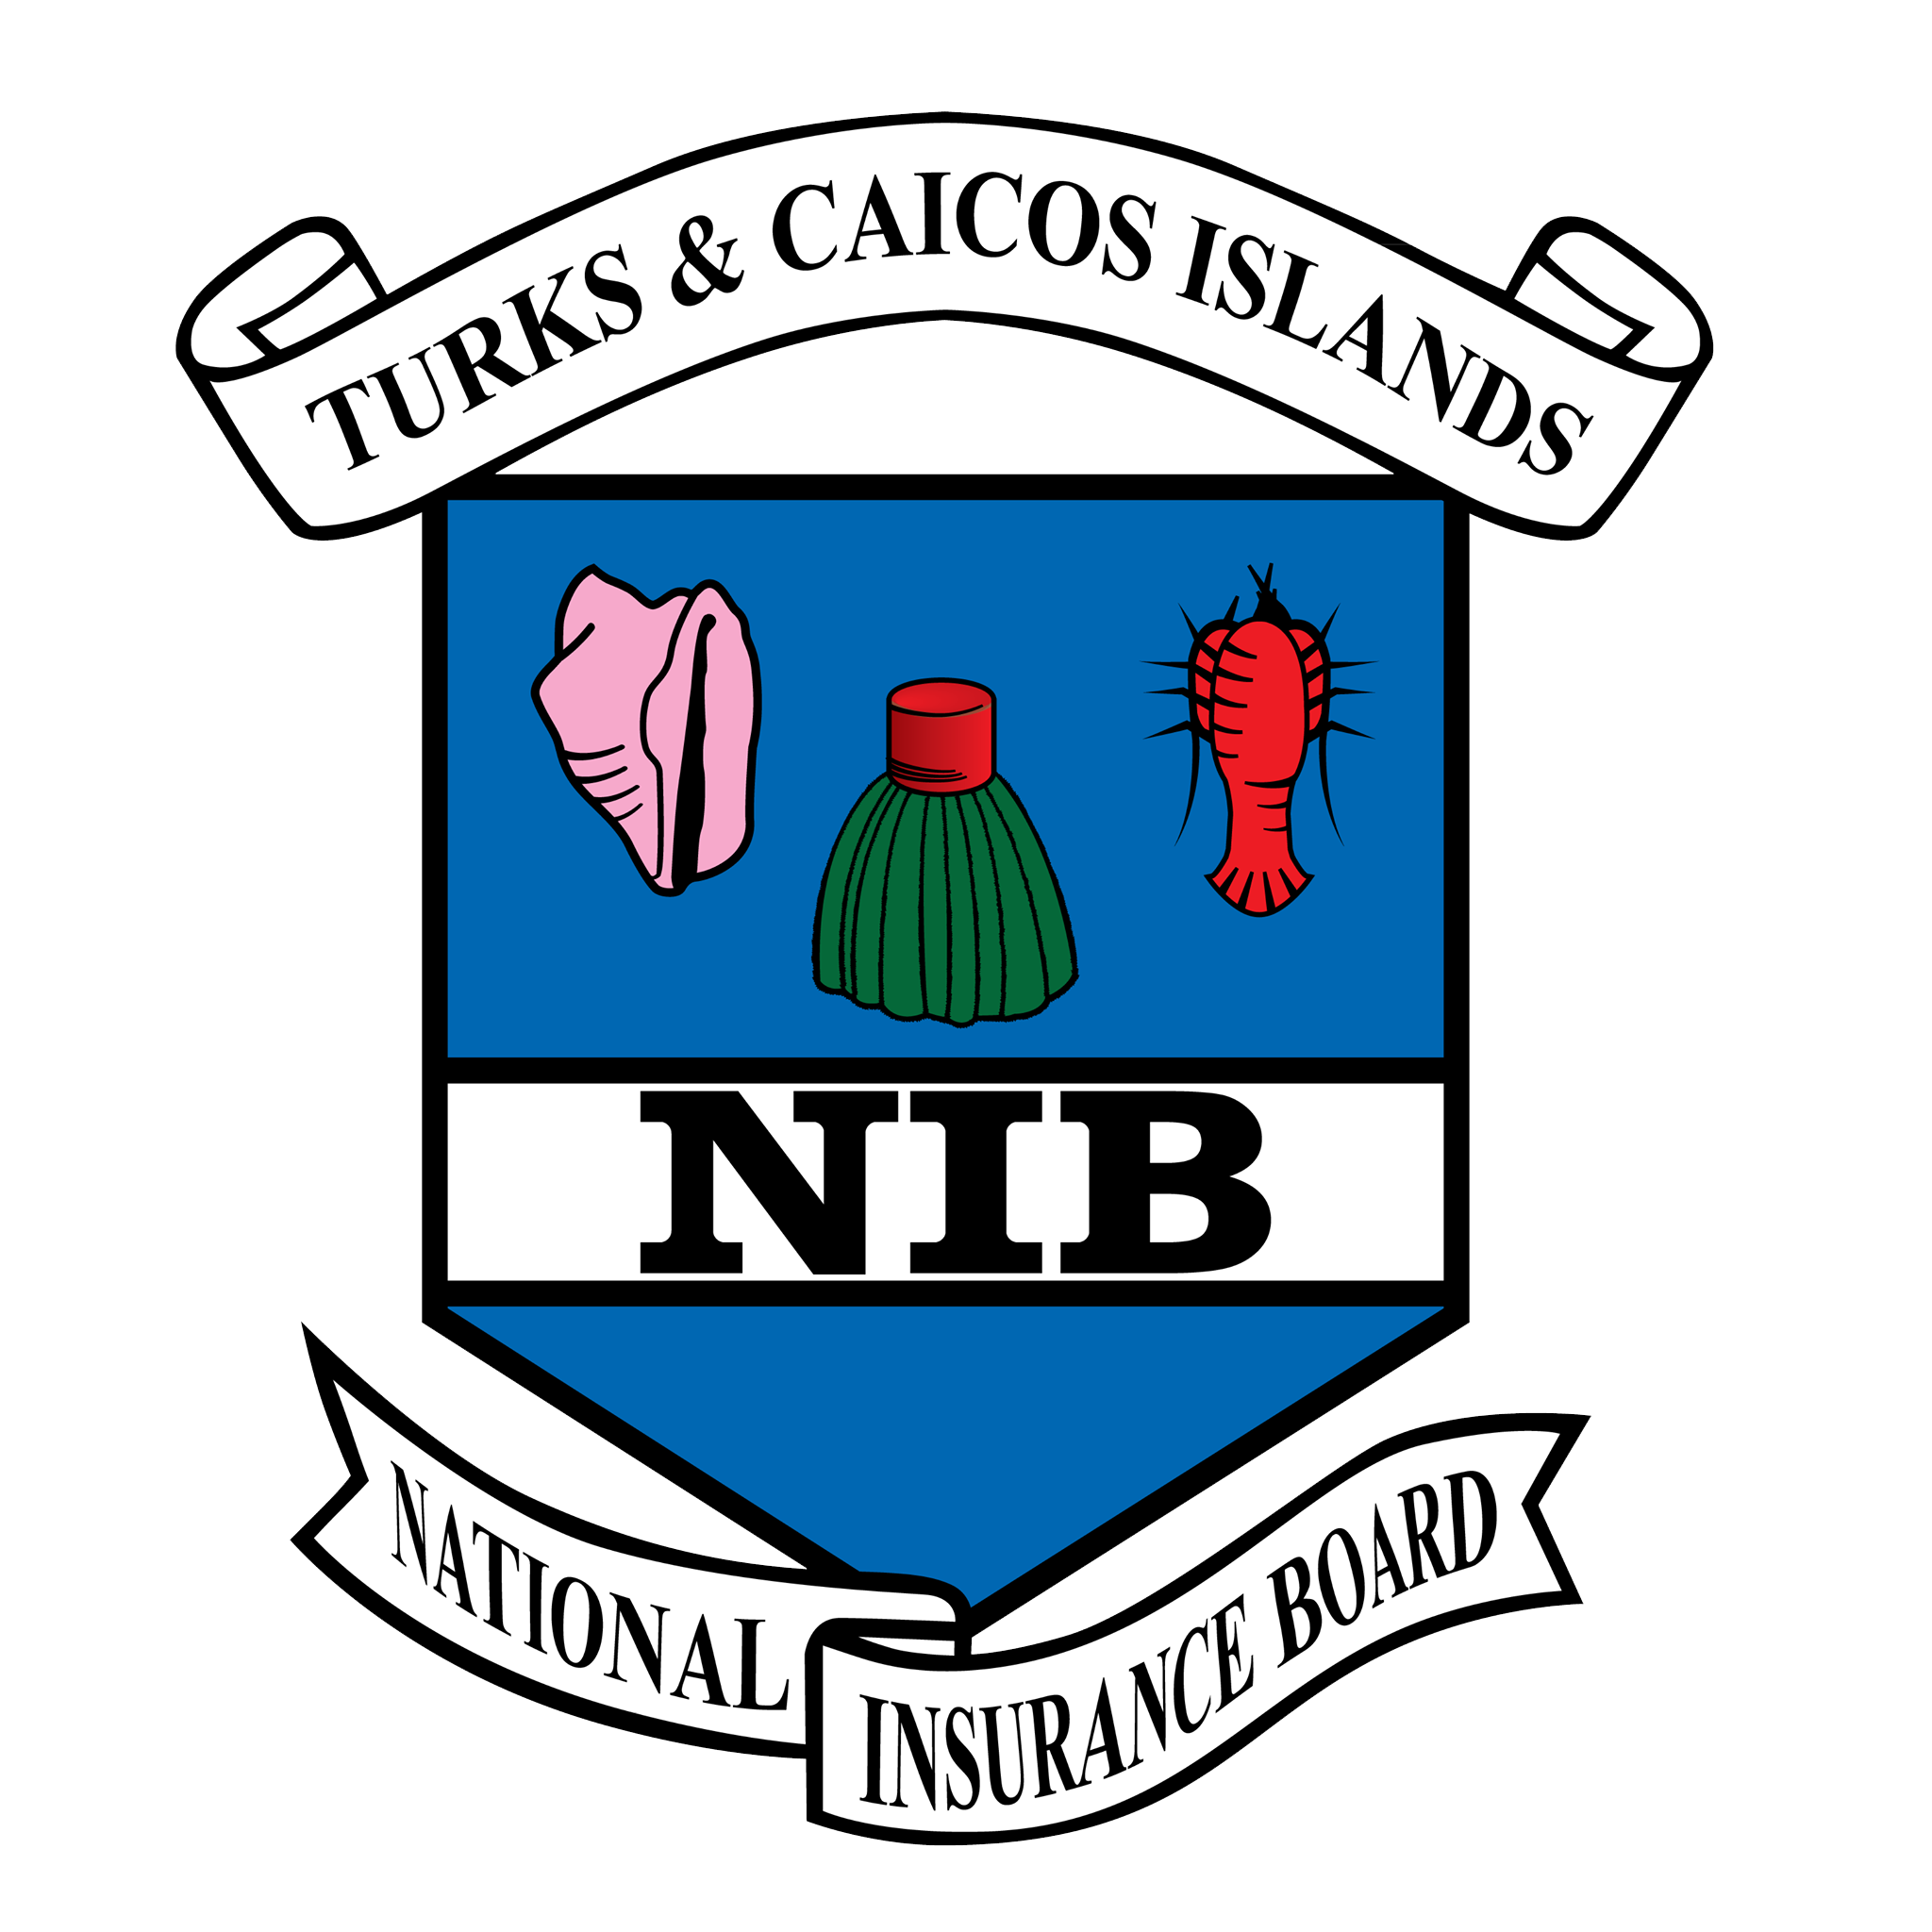 TCI National Insurance Board